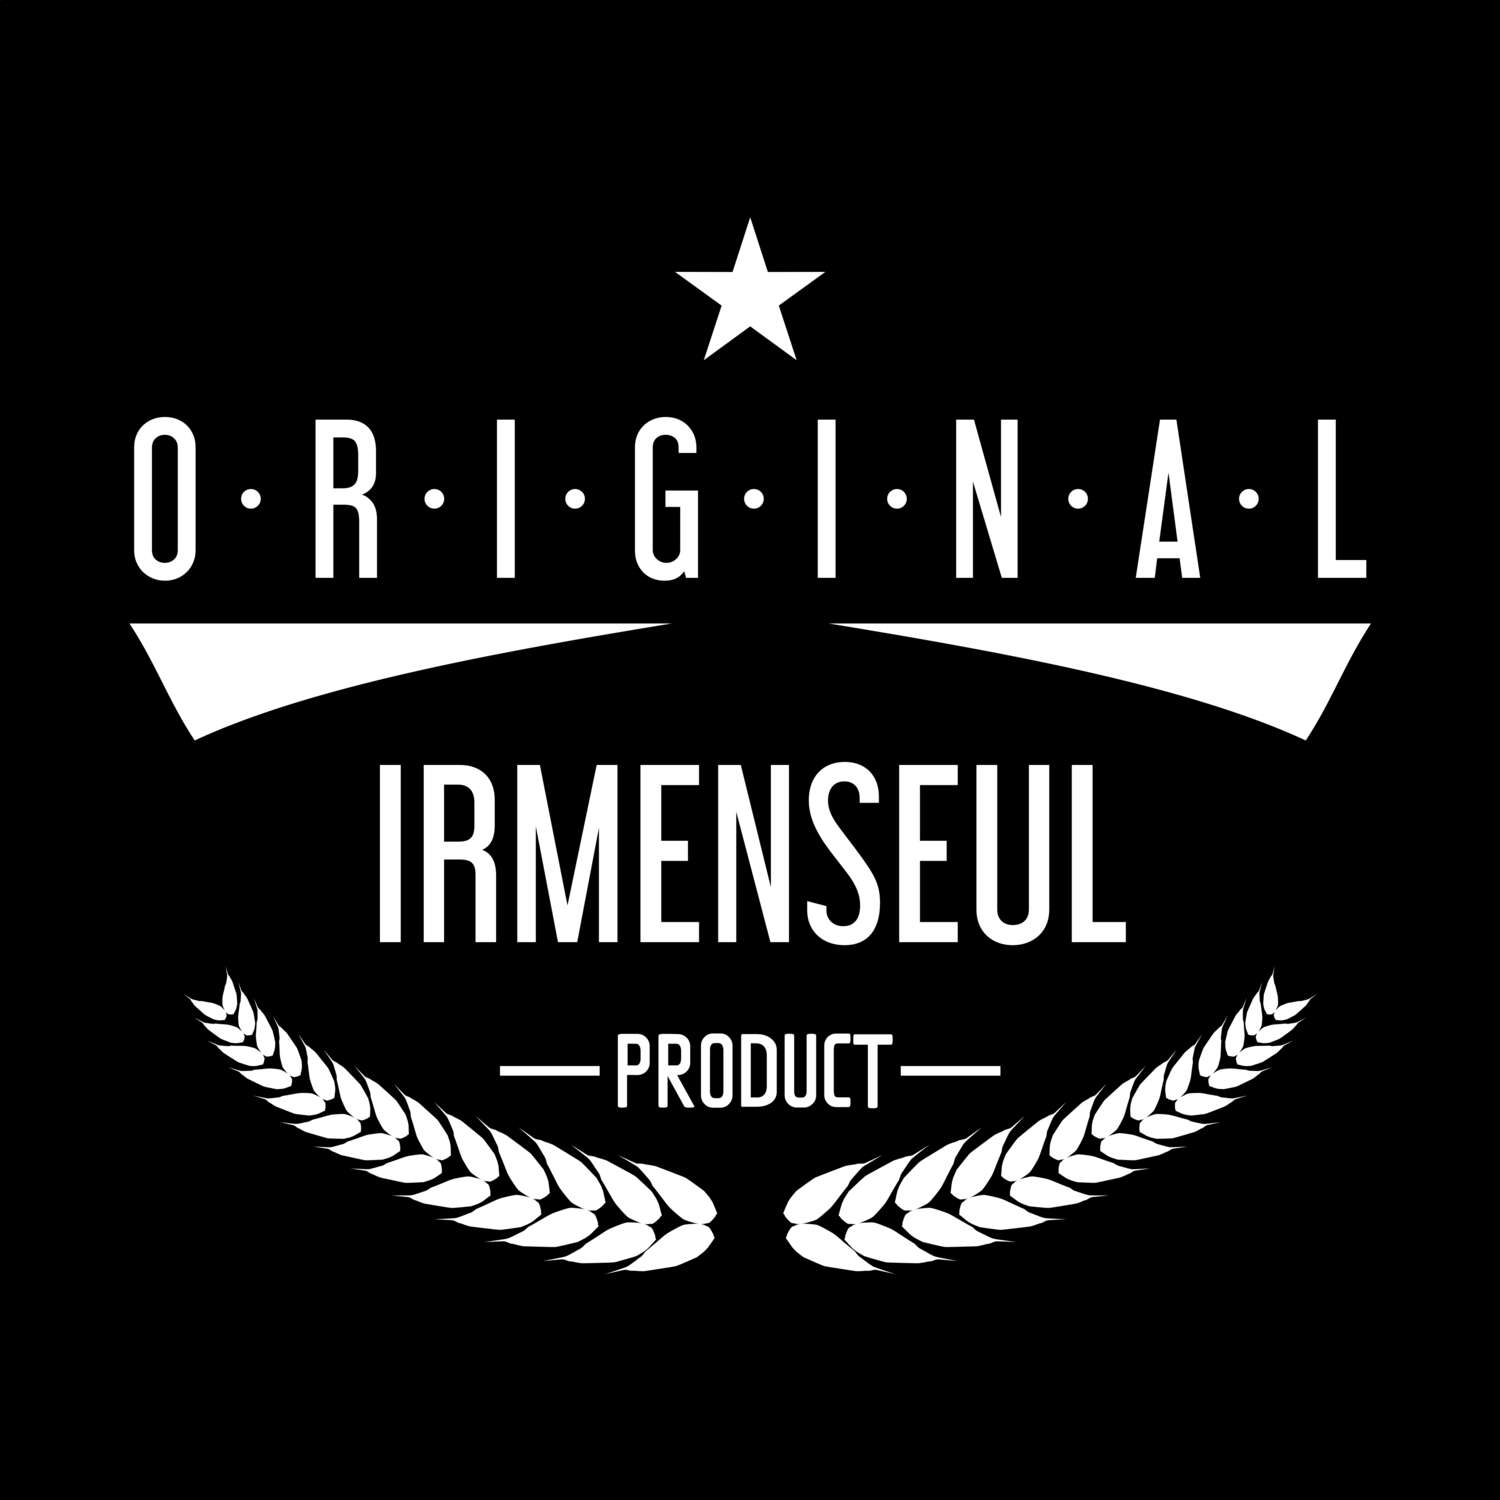 Irmenseul T-Shirt »Original Product«